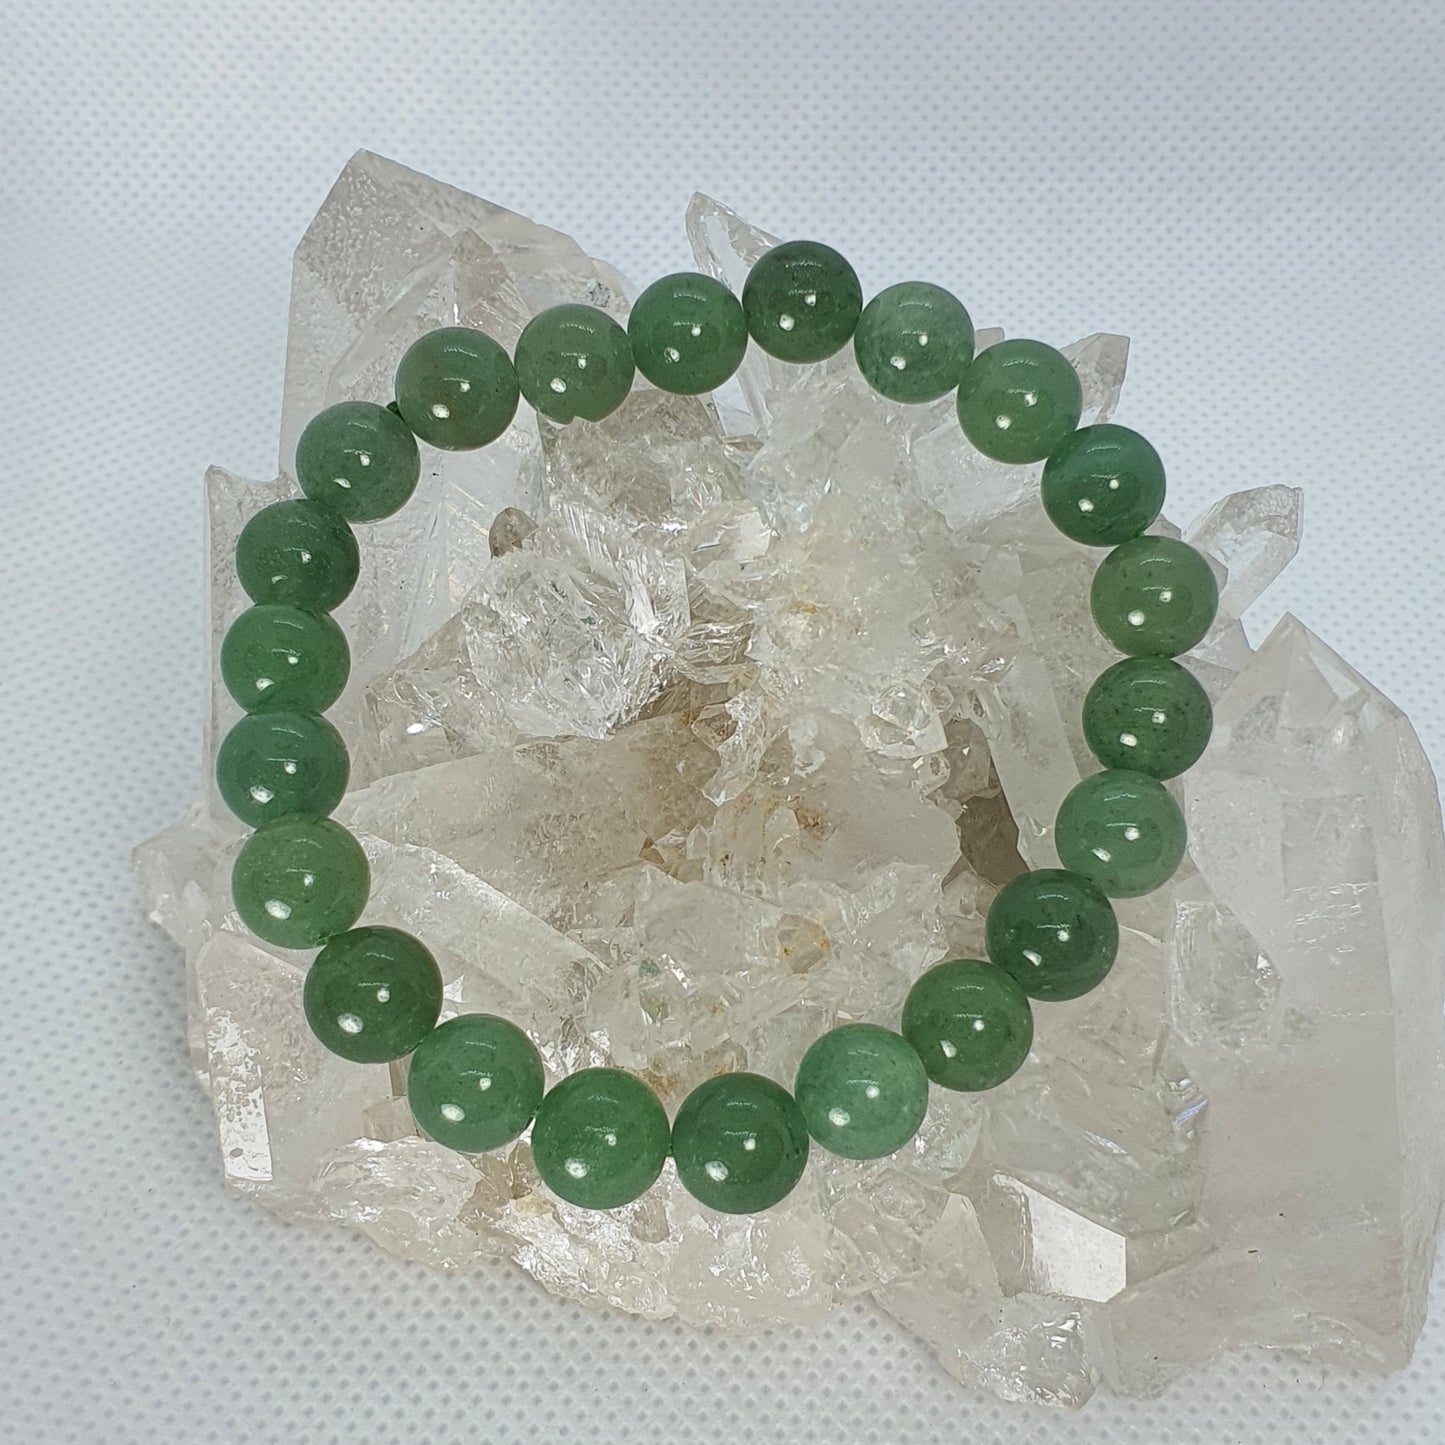 Crystals - Aventurine (Green) Bracelet